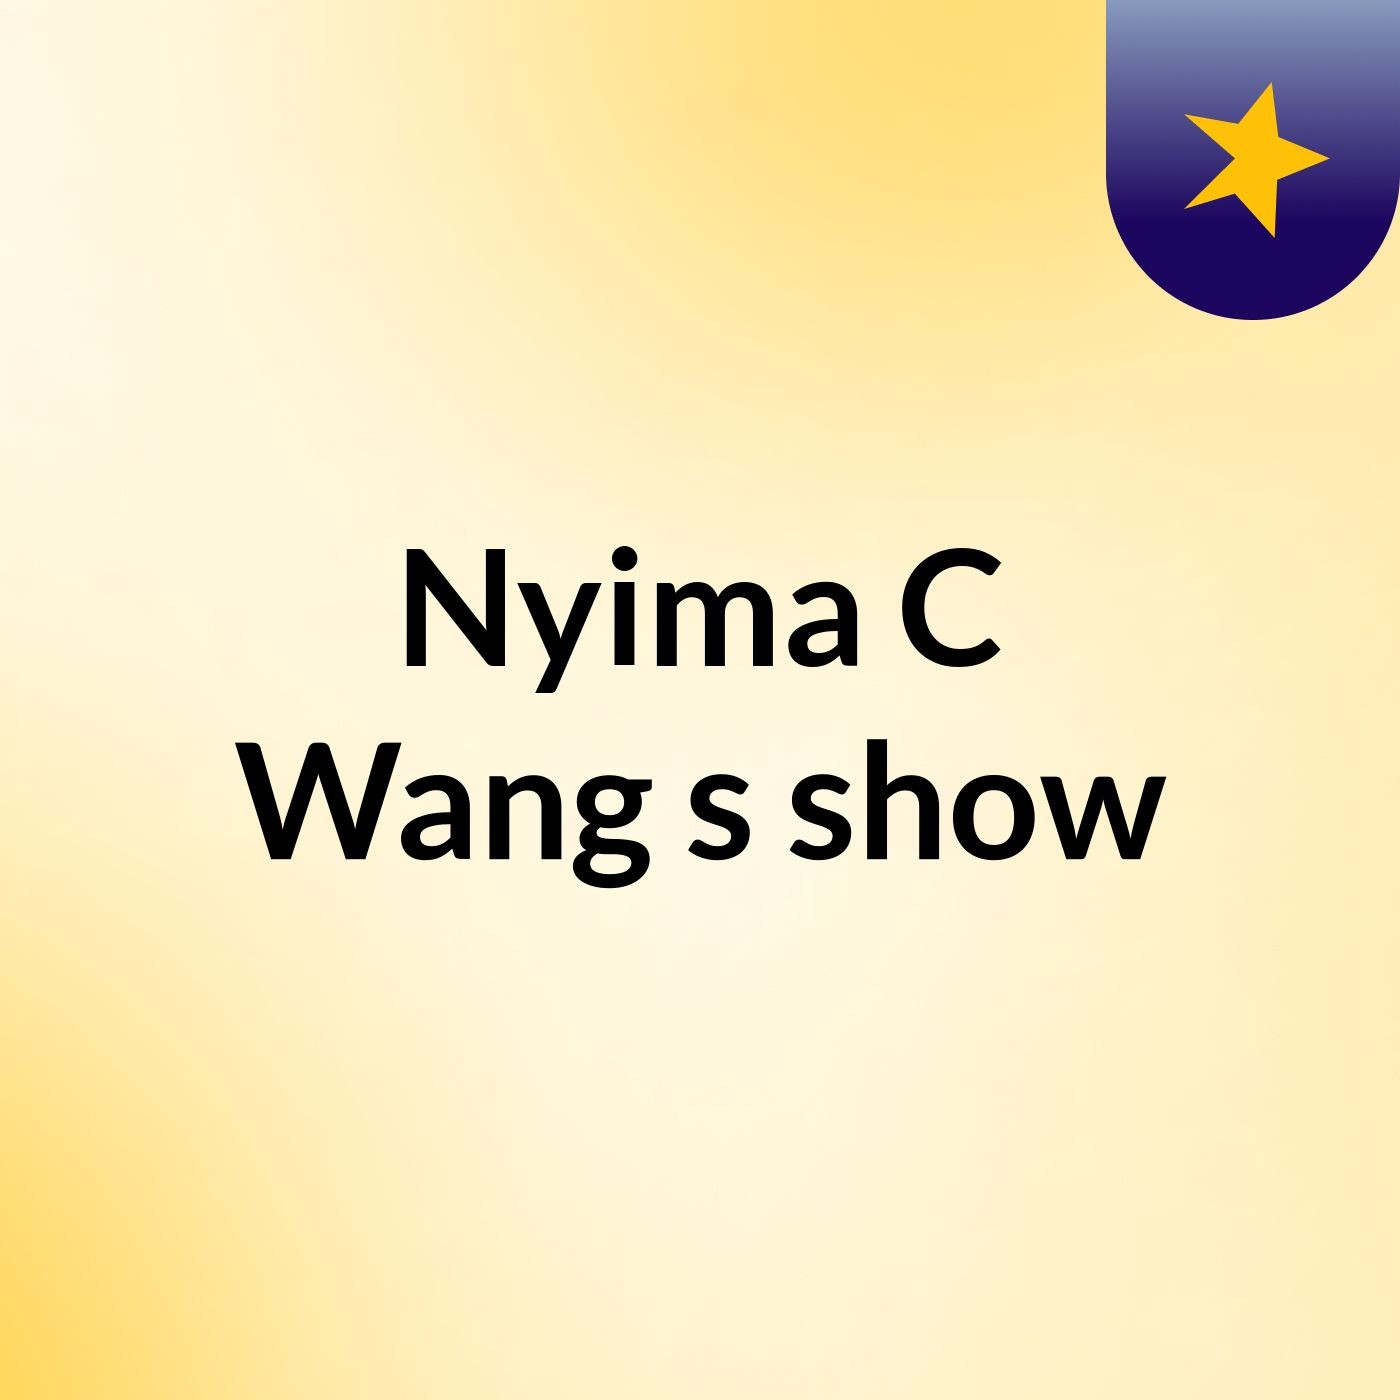 Nyima C Wang's show